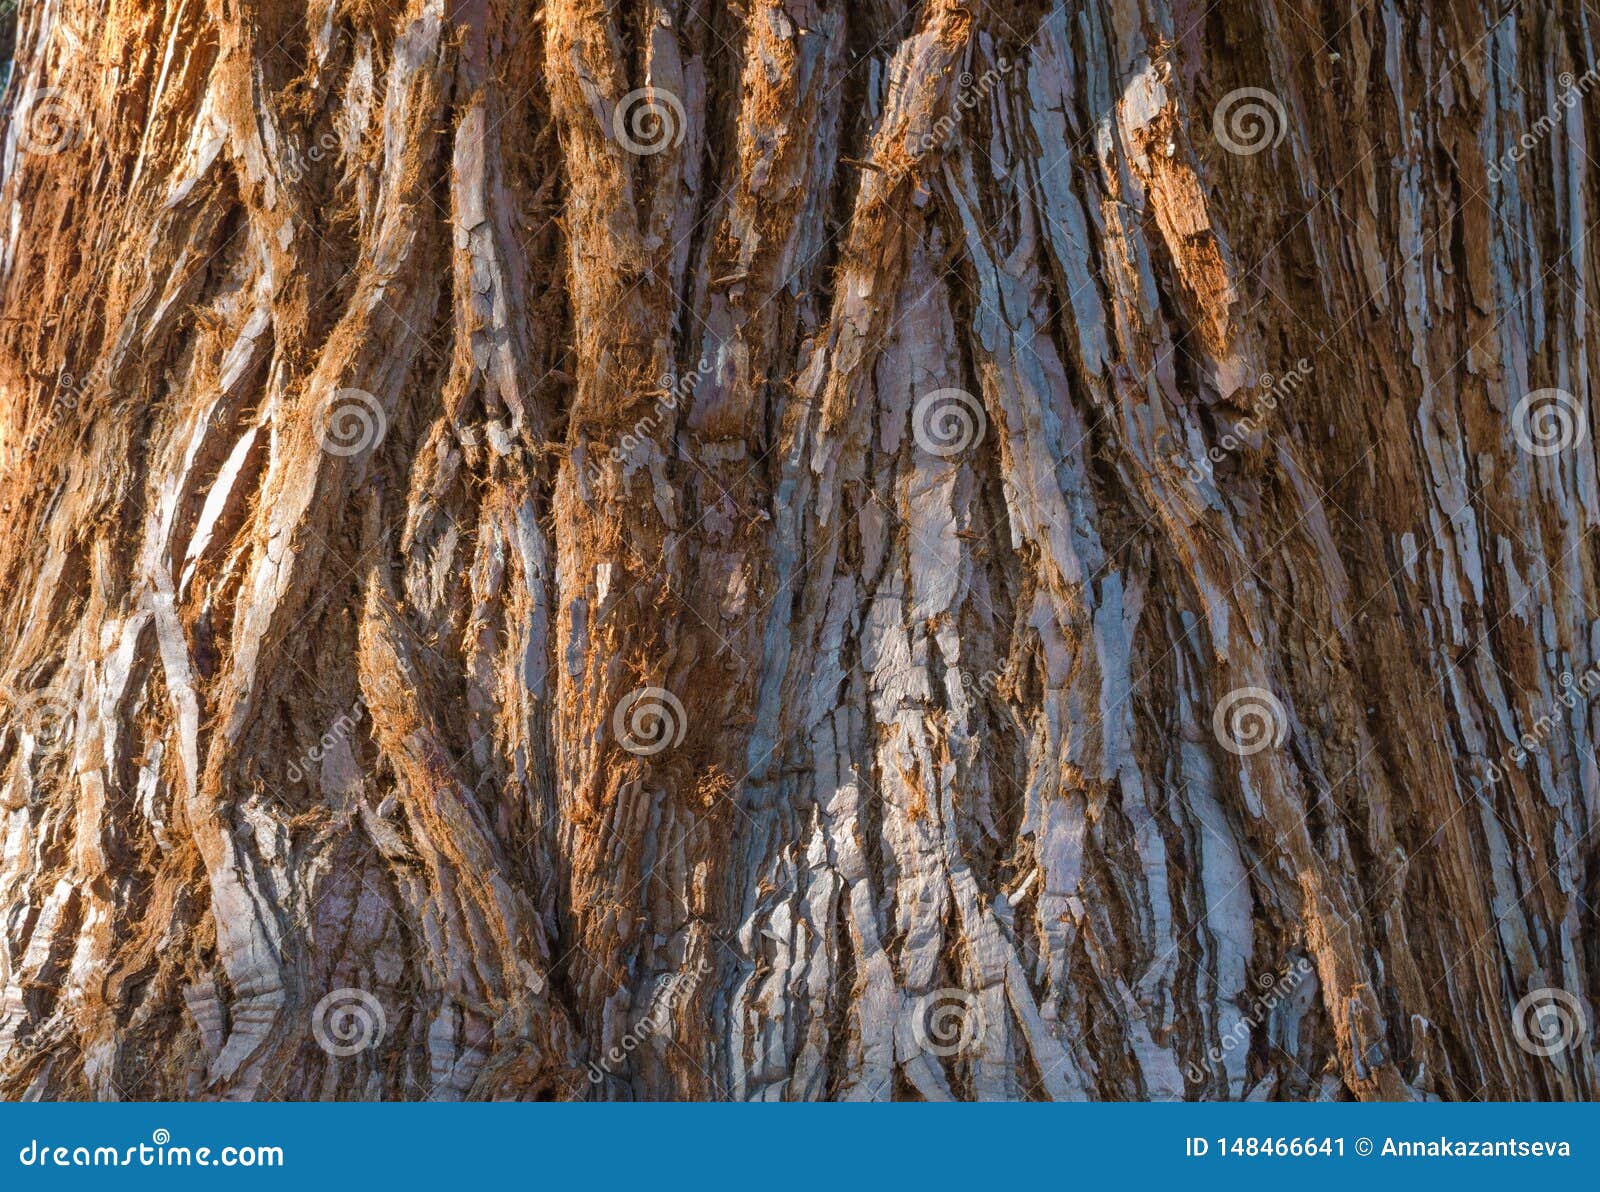 the giant sequoia sequoiadendron giganteum trunk bark. close up. selective focus.r